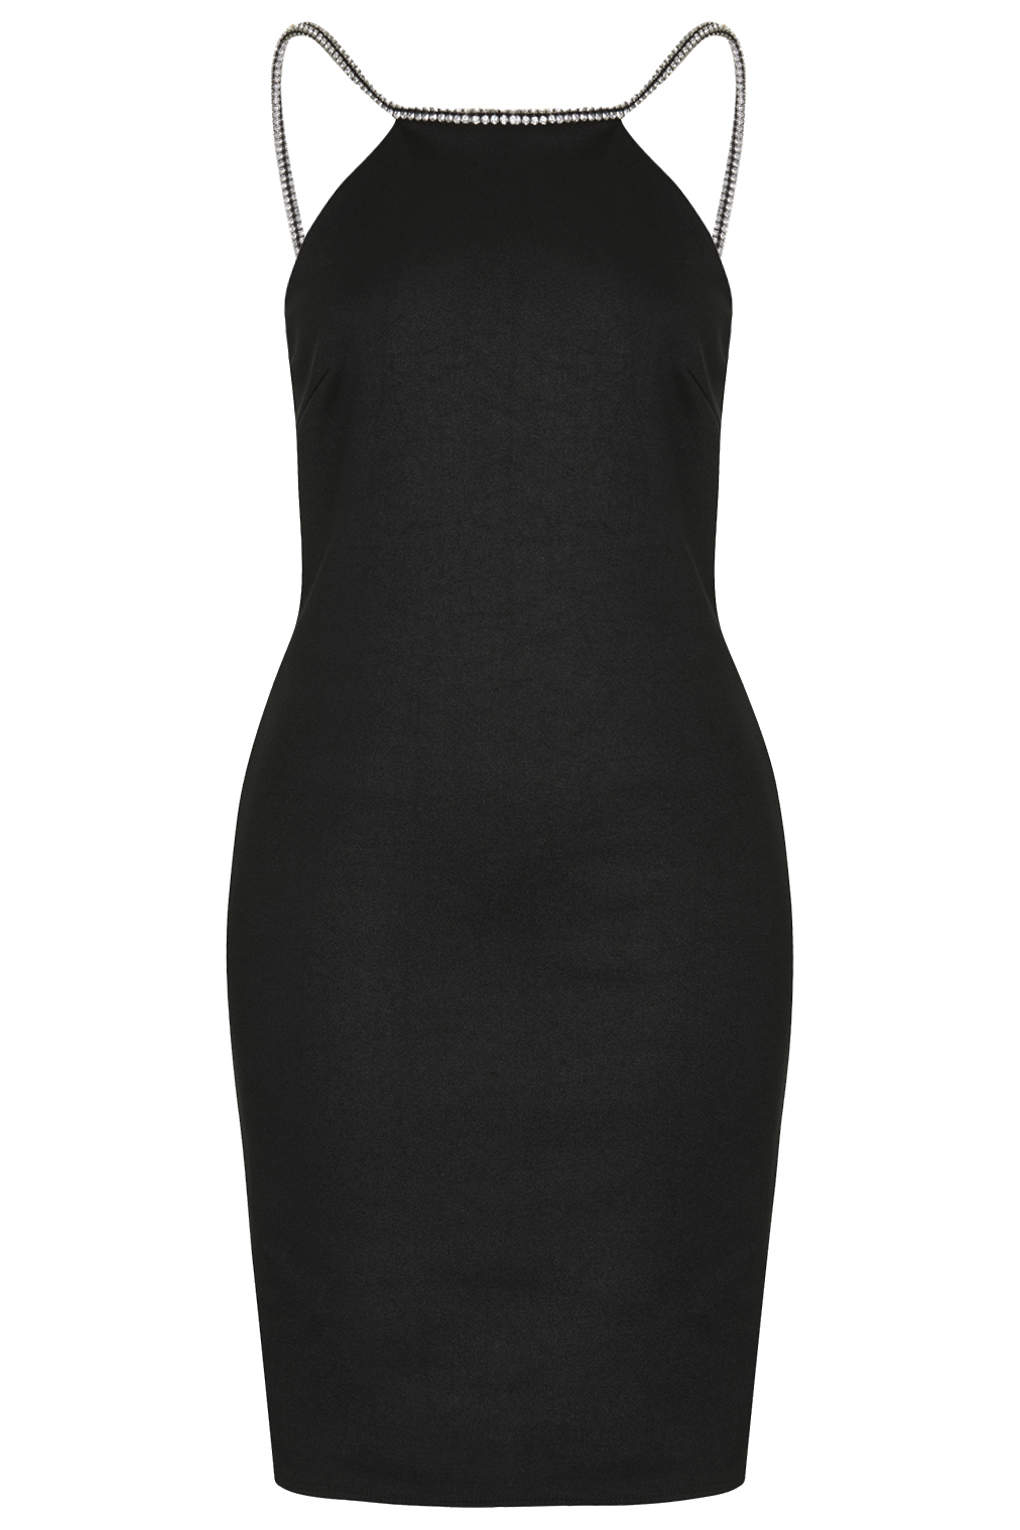 Lyst - Topshop Womens Diamante Trim Bodycon Dress - Black in Black